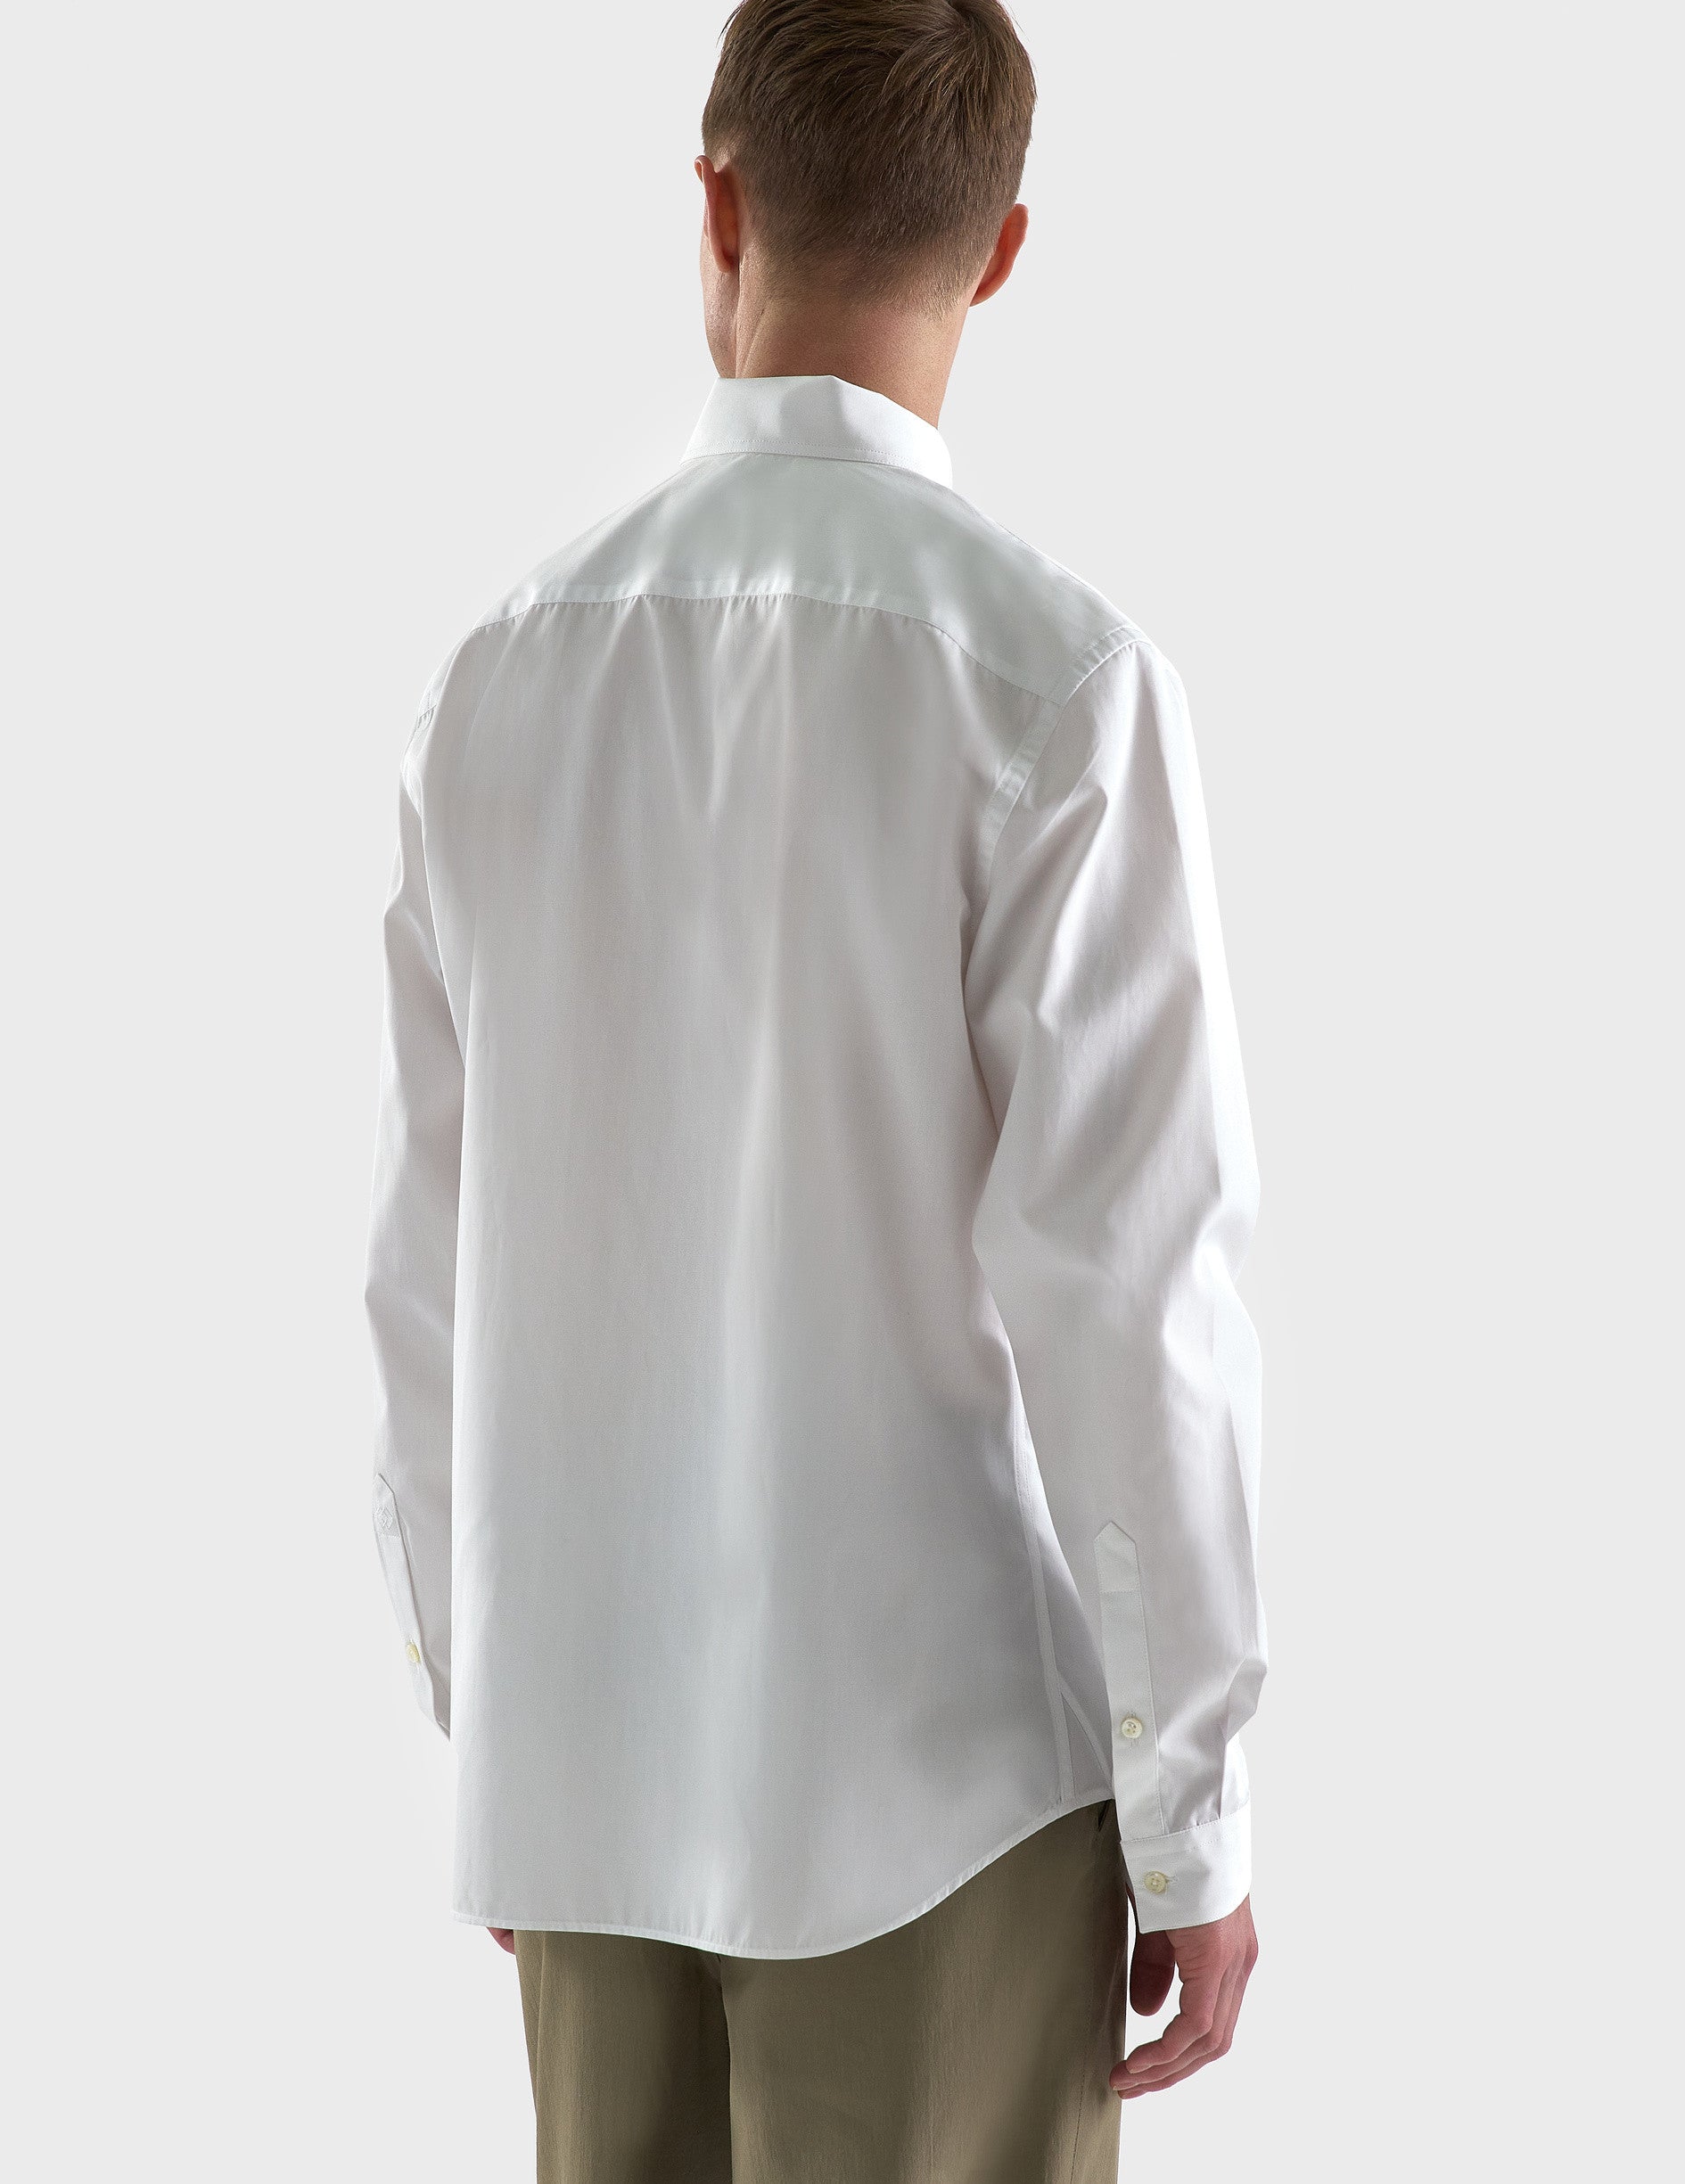 Semi-fitted white shirt - Poplin - Indian Collar